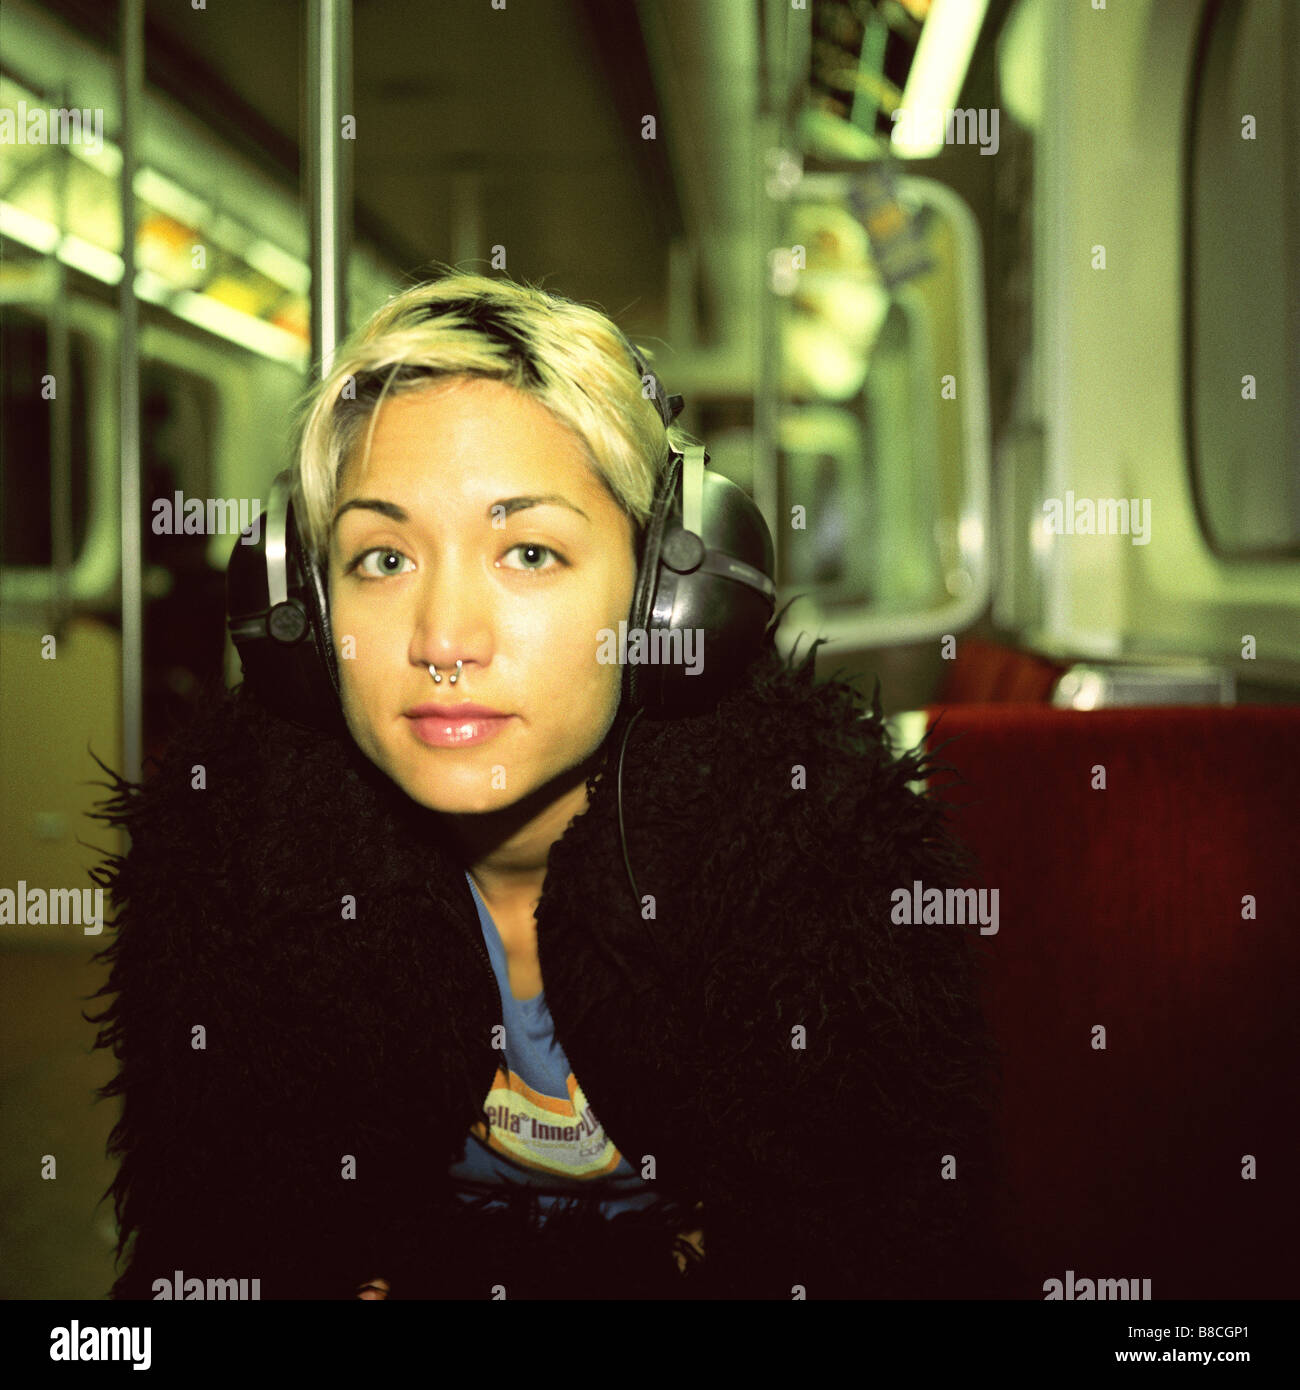 FL6308, Huy Lam ; Portrait young woman wearing headphones subway Banque D'Images